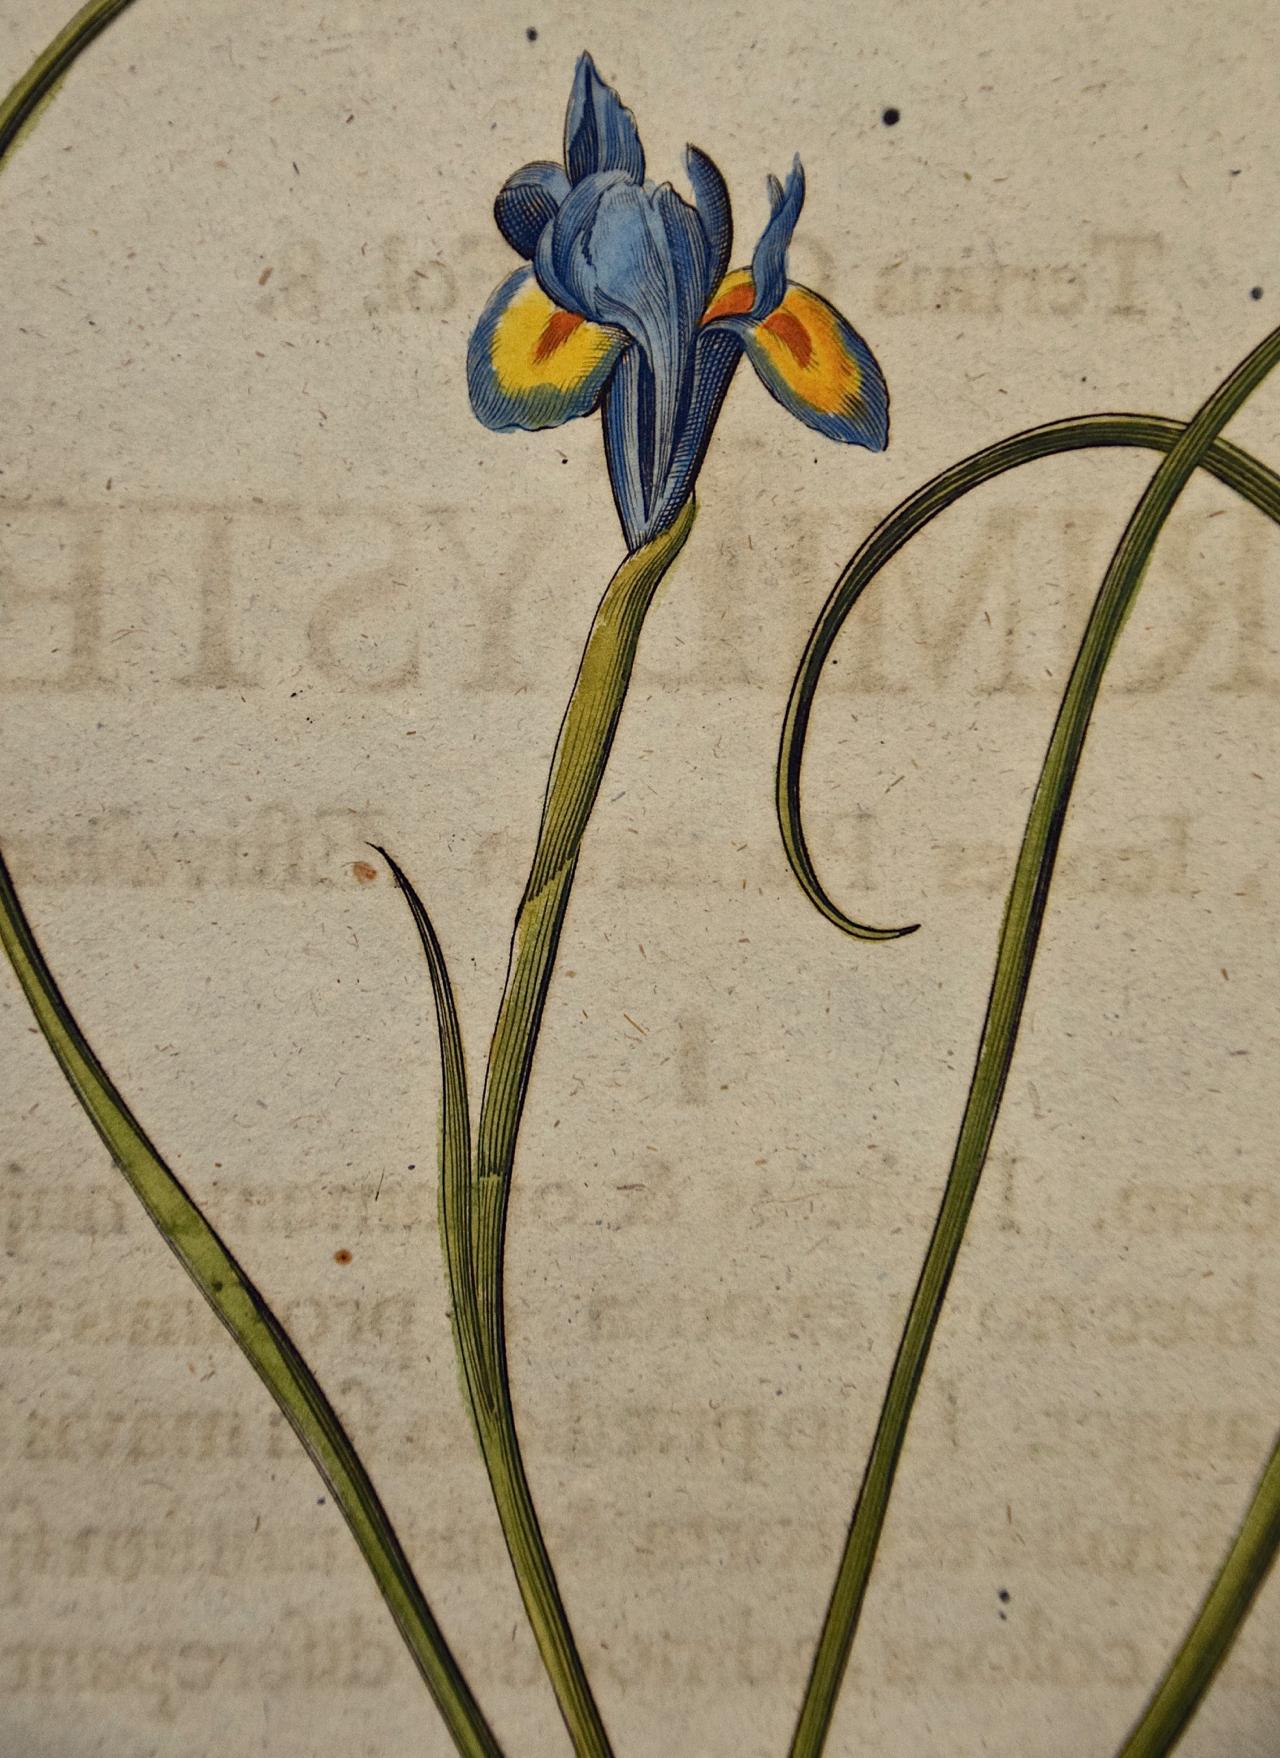 Besler Hand-colored Botanical Engraving of Flowering  Plants   - Academic Print by Basilius Besler